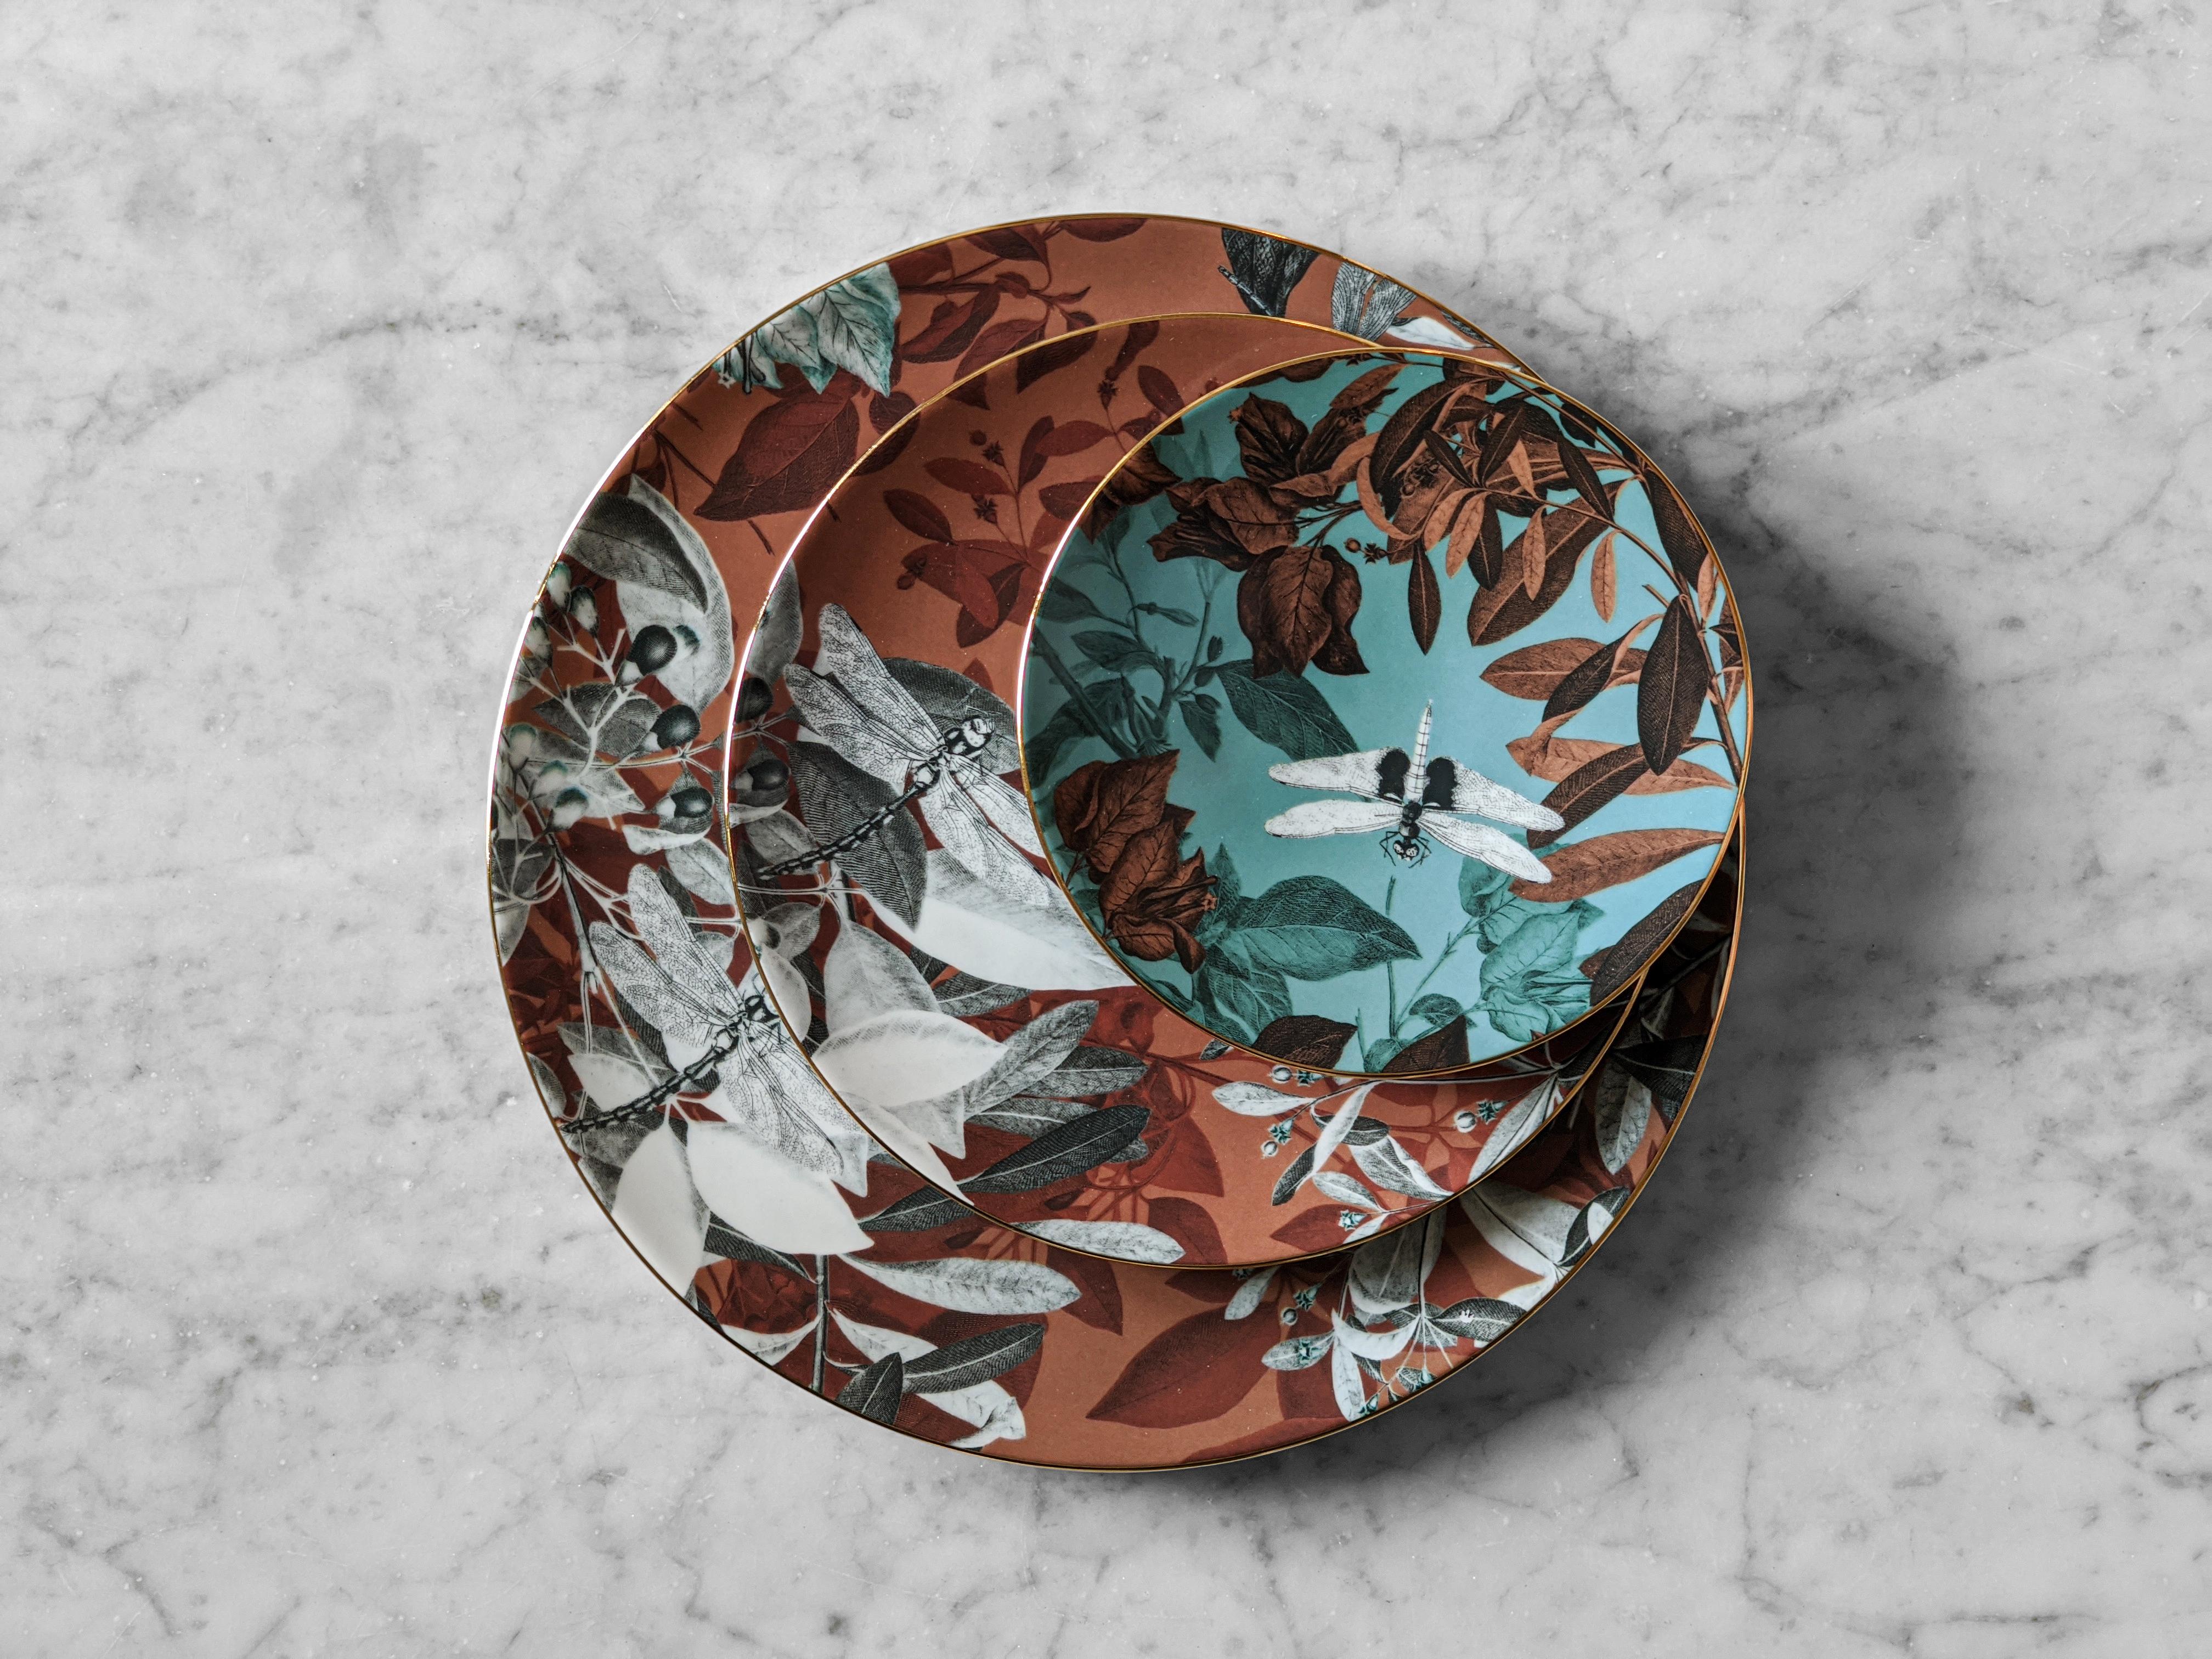 Black Dragon, Six Contemporary Porcelain Dinner Plates with Decorative Design For Sale 6